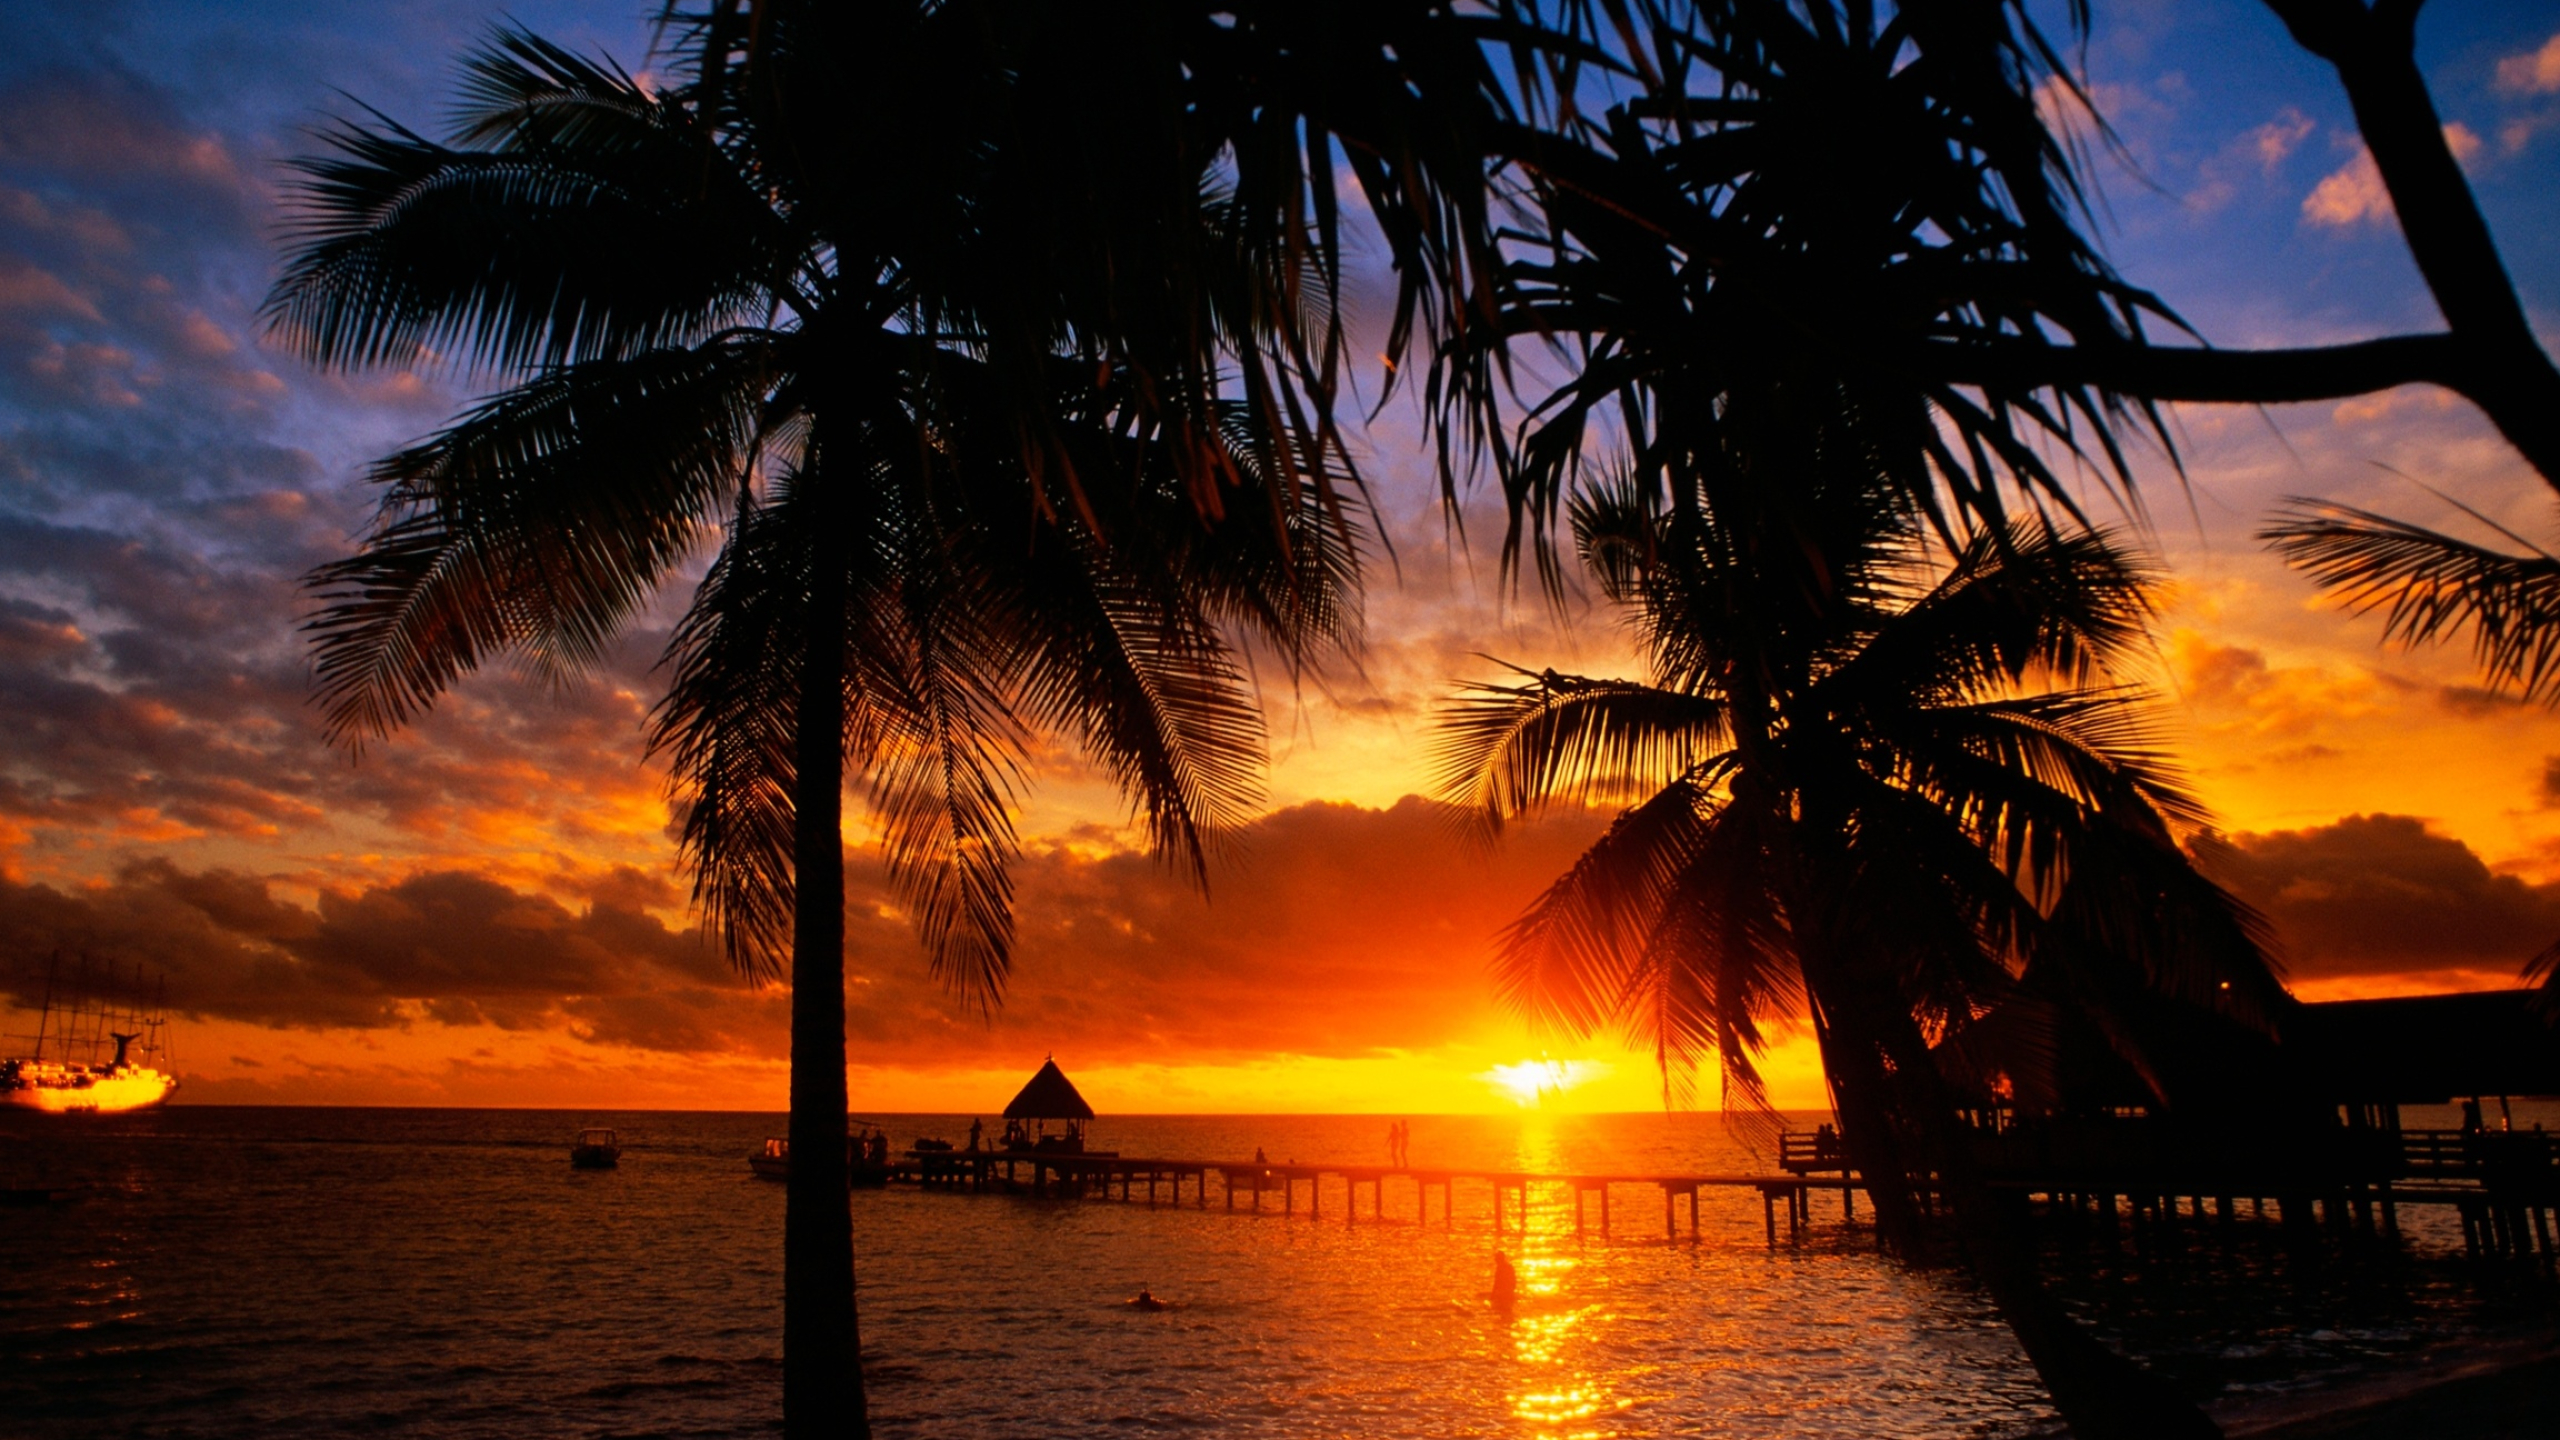 Rangiroa Atoll, French Polynesia, Tropical paradise, Picture-perfect beaches, 2560x1440 HD Desktop